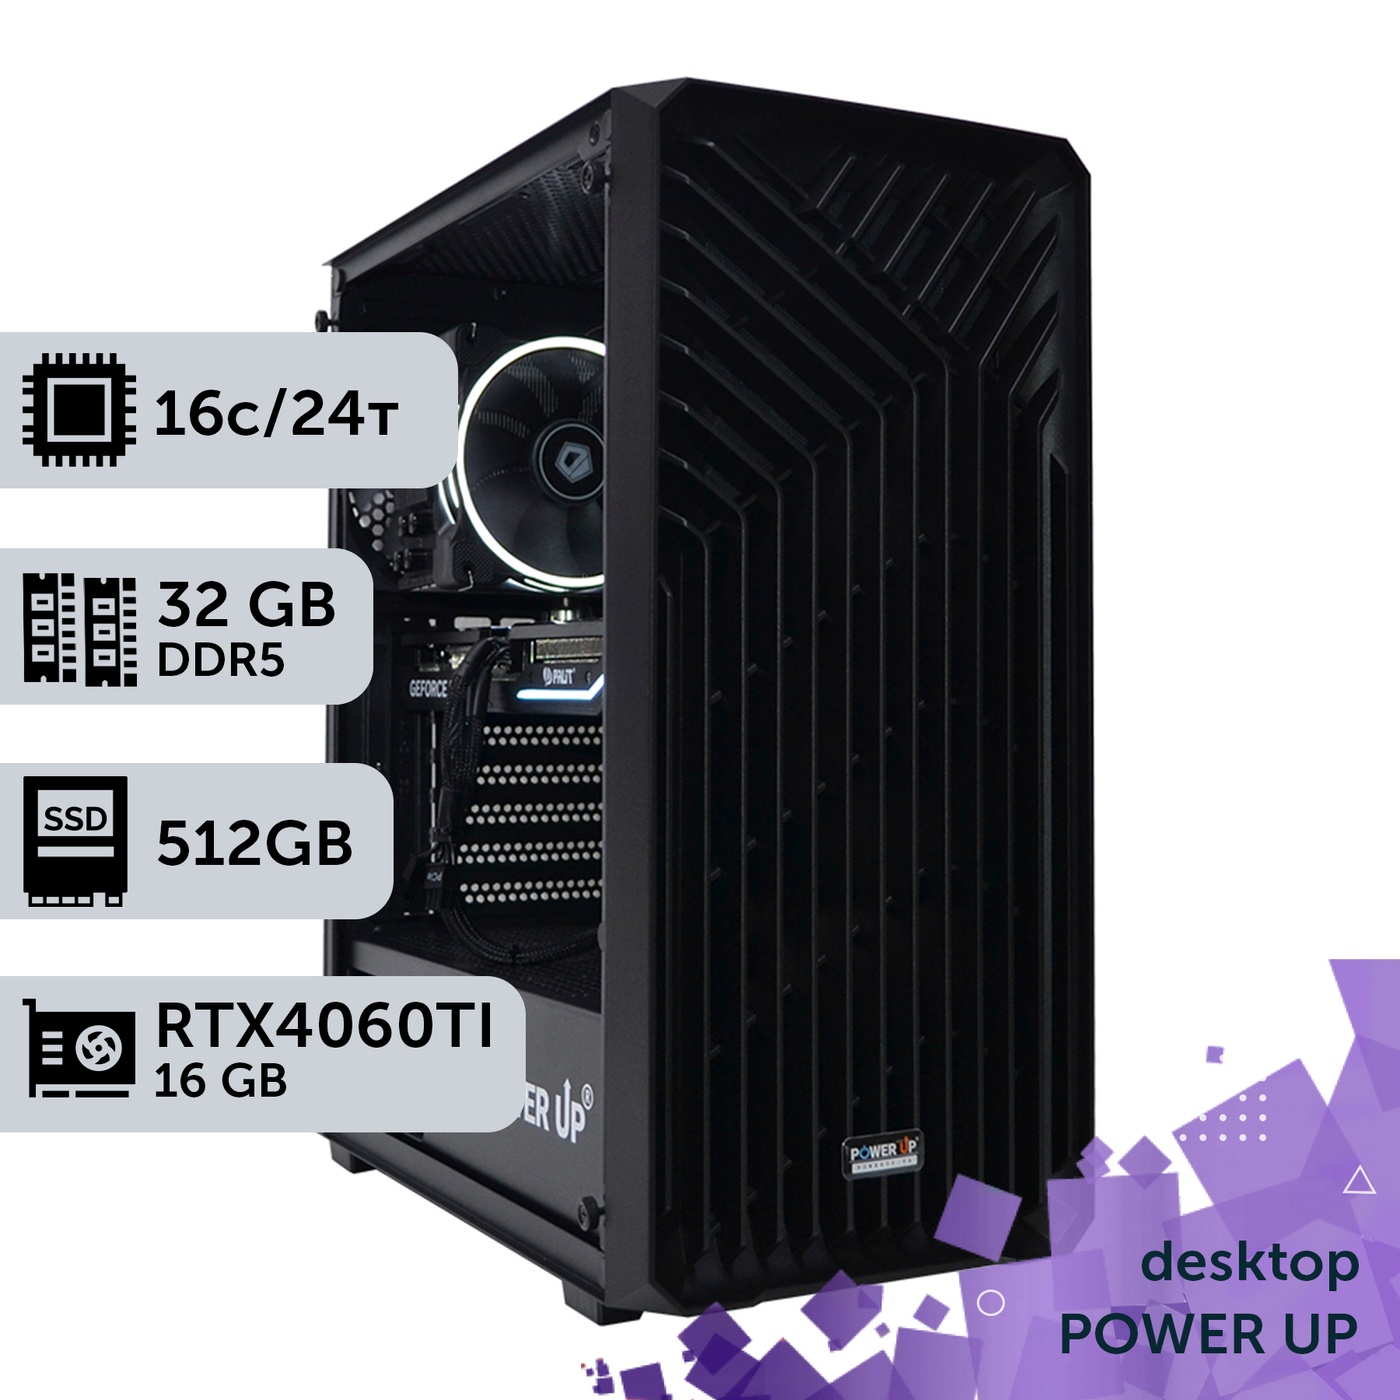 Рабочая станция PowerUp Desktop #290 Core i7 13700K/32 GB/SSD 512GB/GeForce RTX 4060Ti 16GB